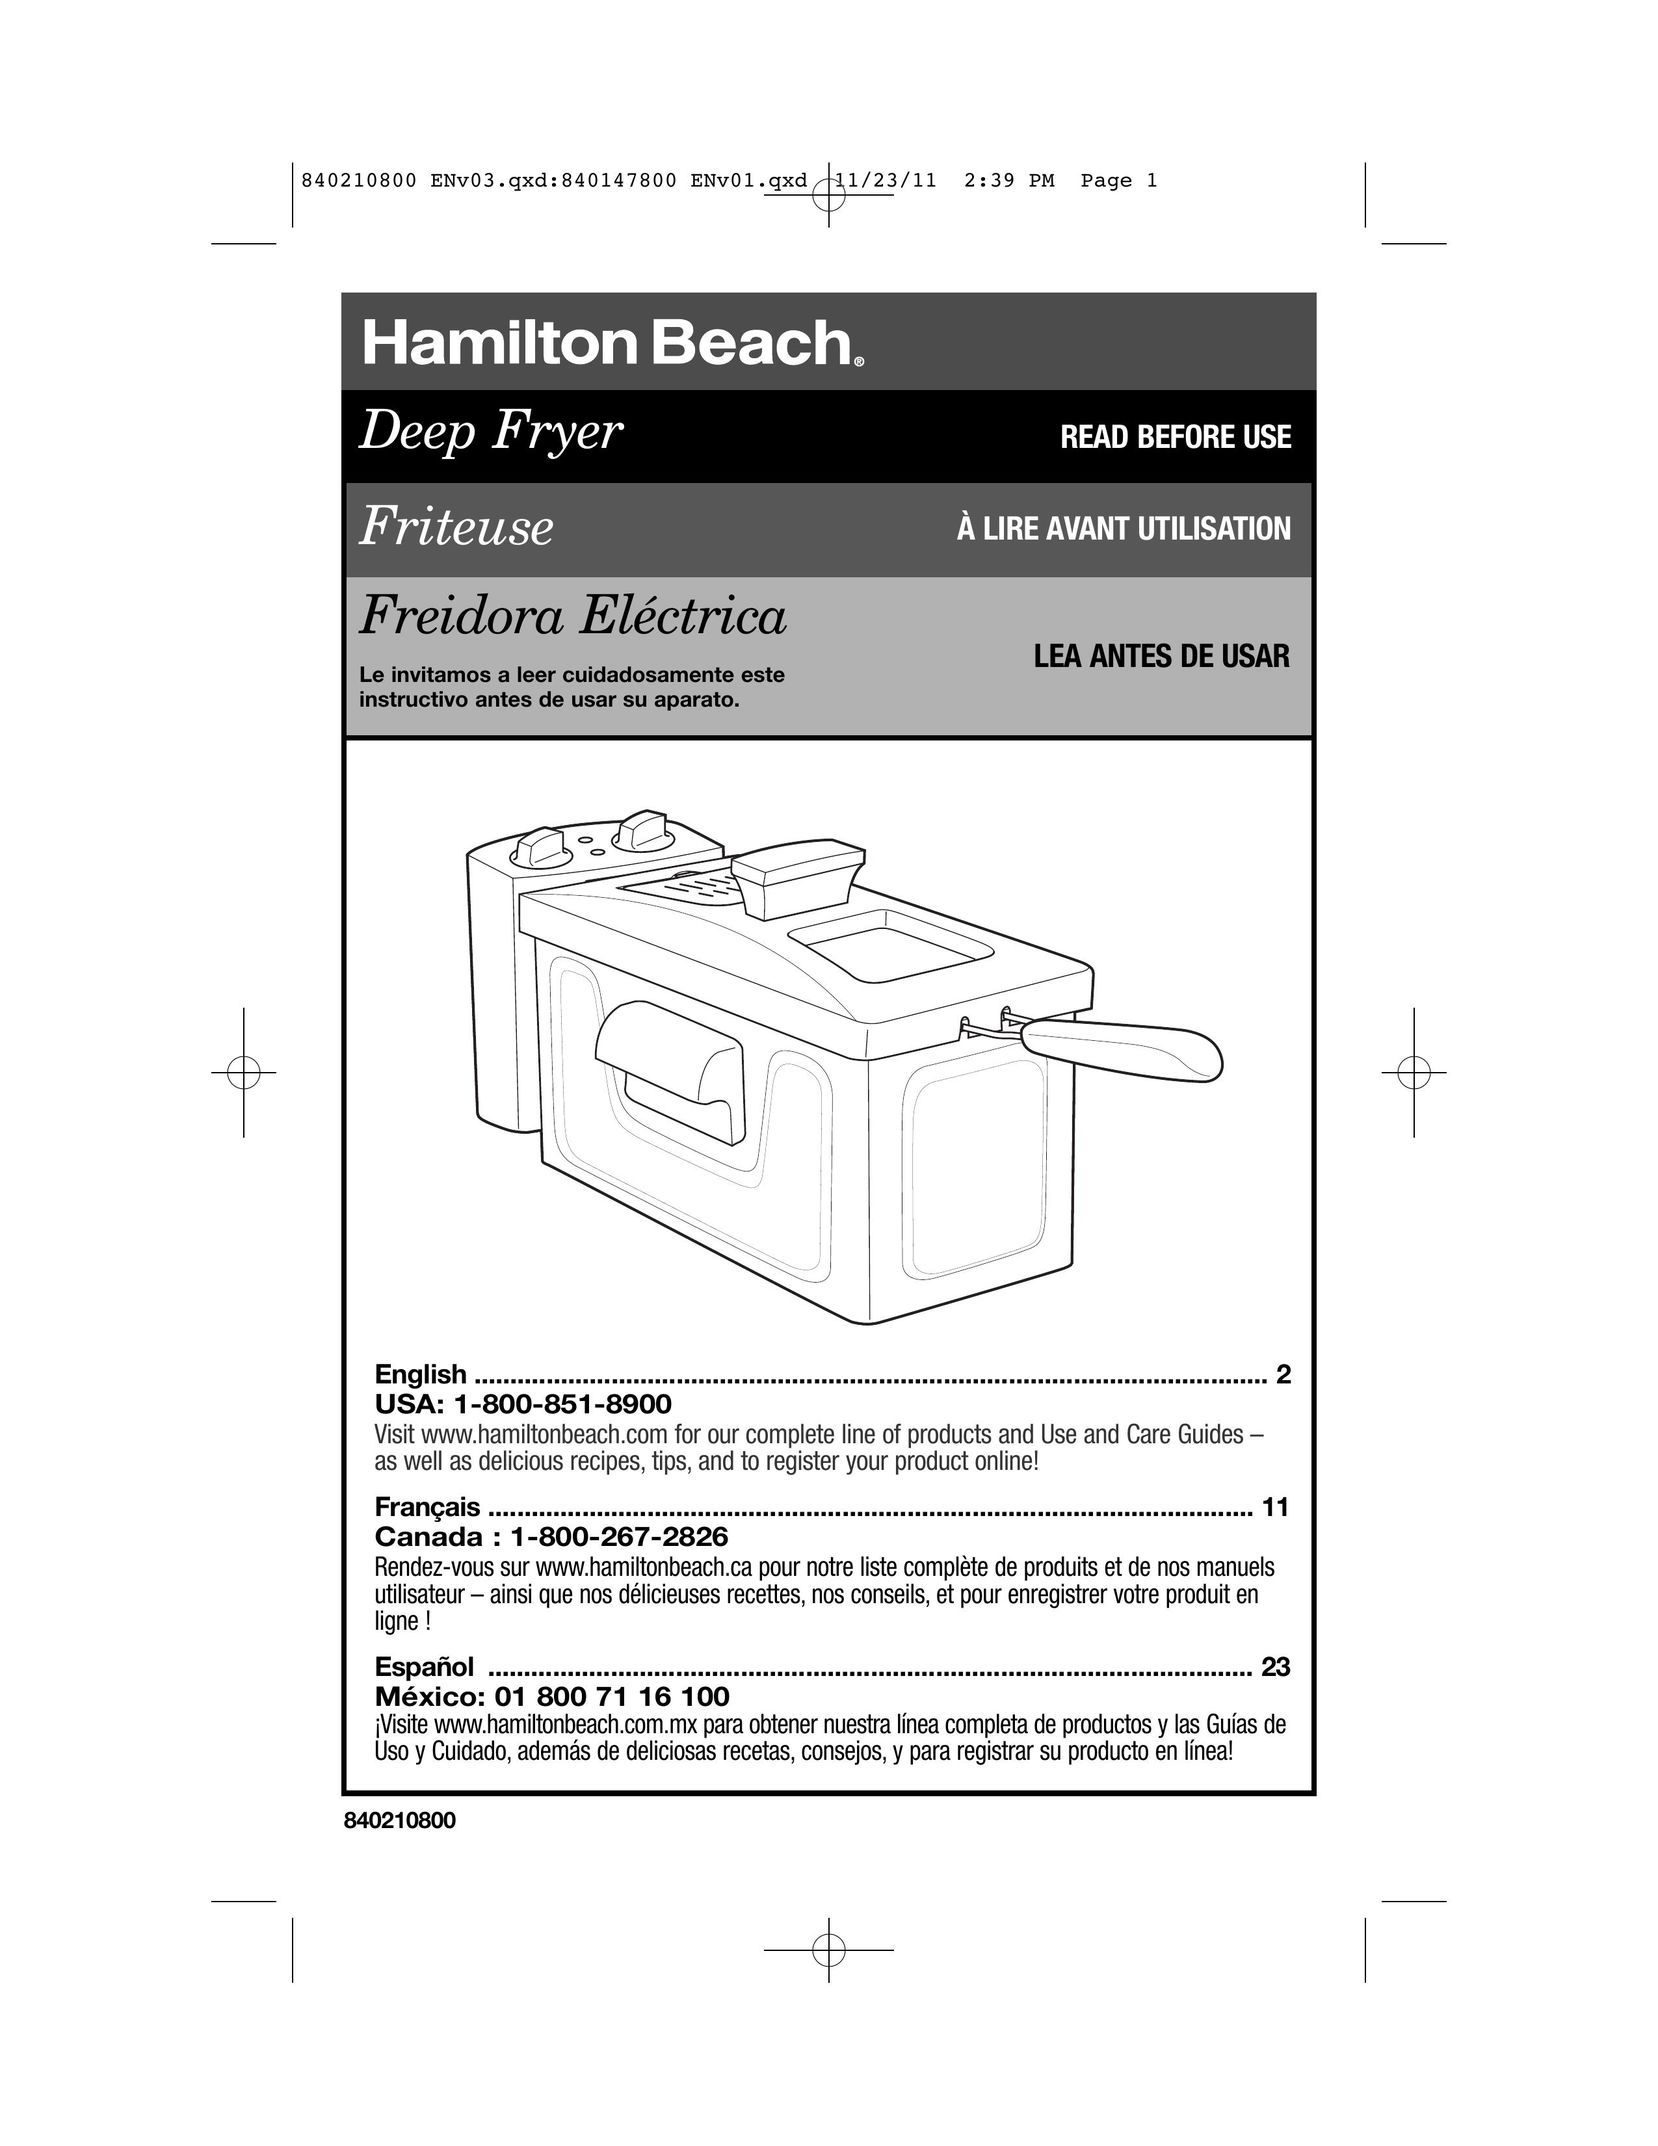 Hamilton Beach 35200 Fryer User Manual